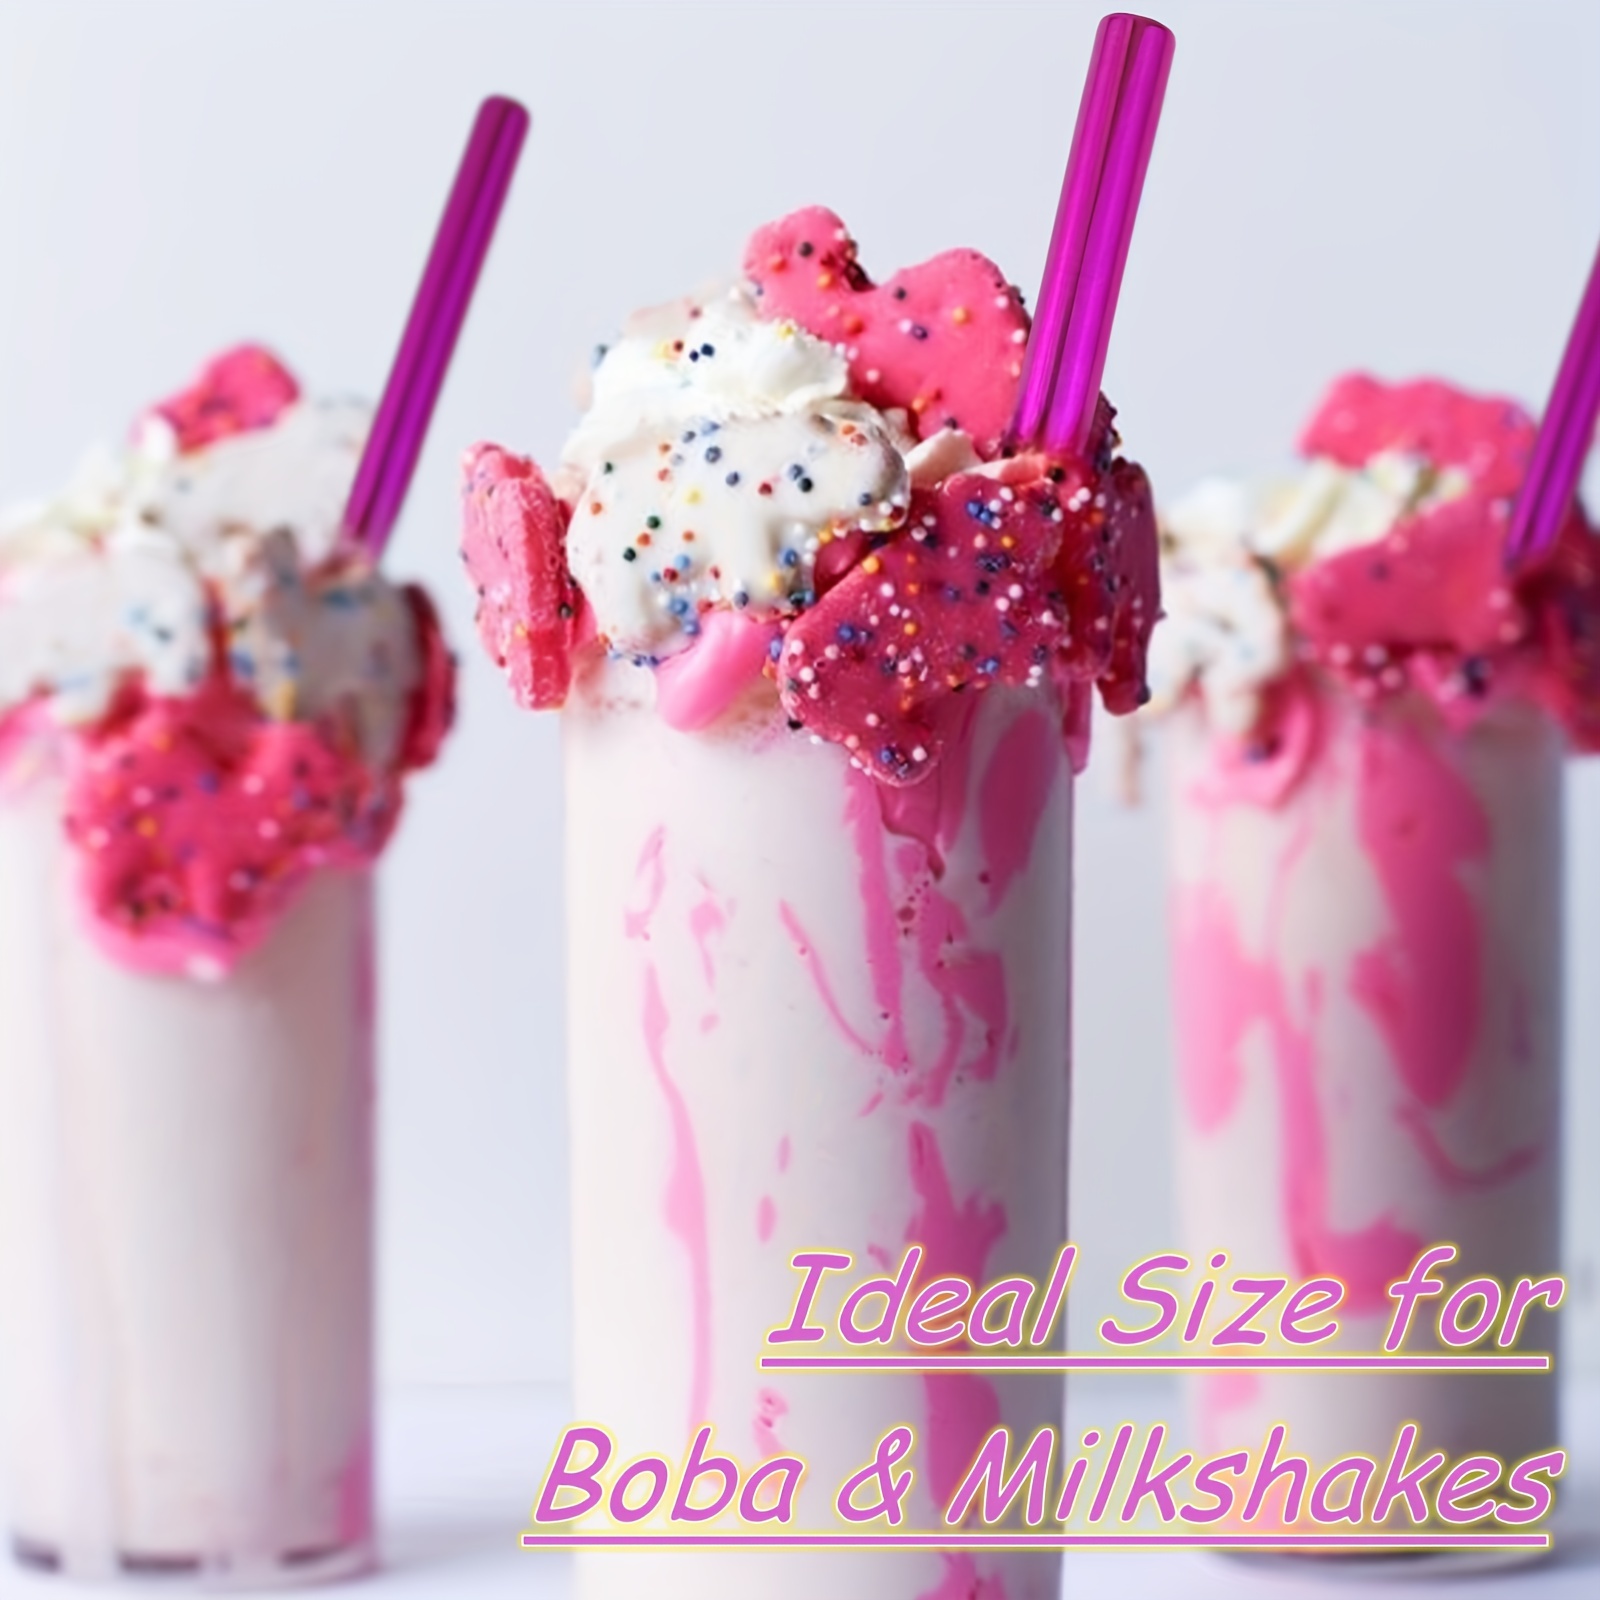 Reusable Boba Straws & Smoothie Straws, Extra Wide 304 Stainless